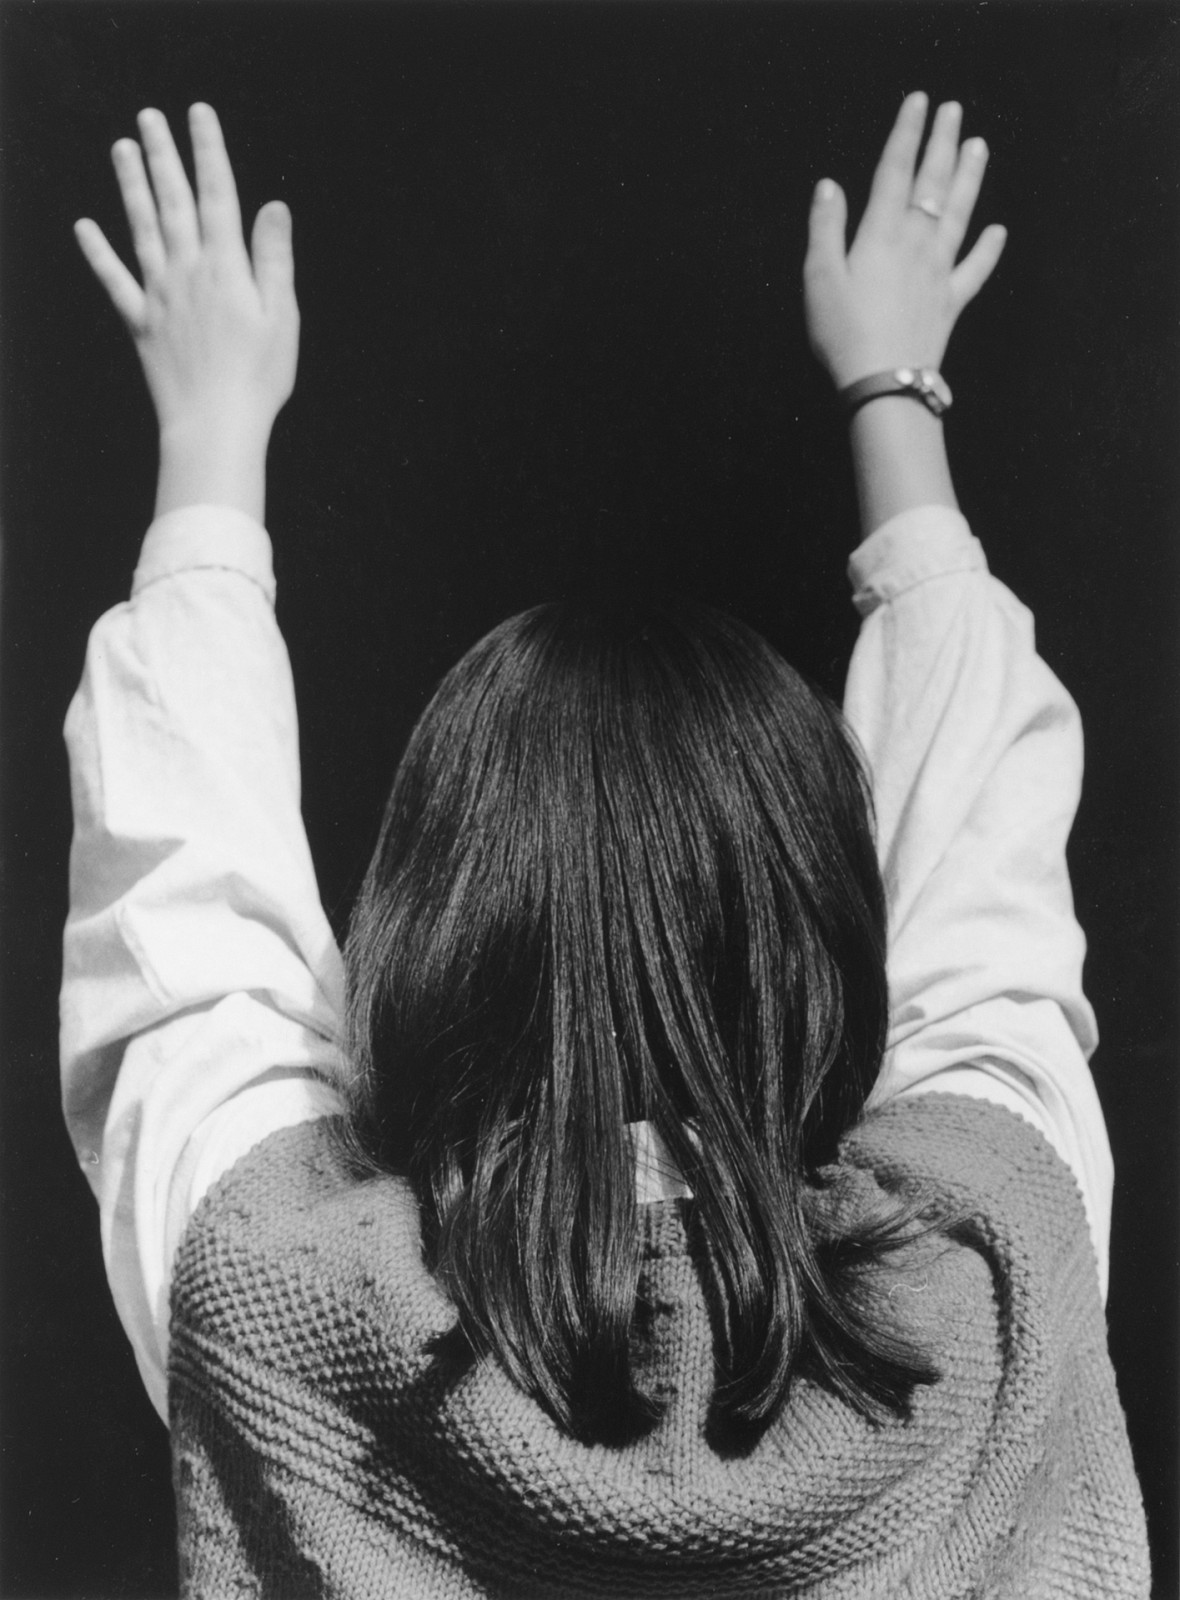 Turi Rapisarda, Mani in alto, 1992 94, serie di 28 fotografie b n, 40 x 30 cm, edizione di 3, courtesy RizzutoGallery